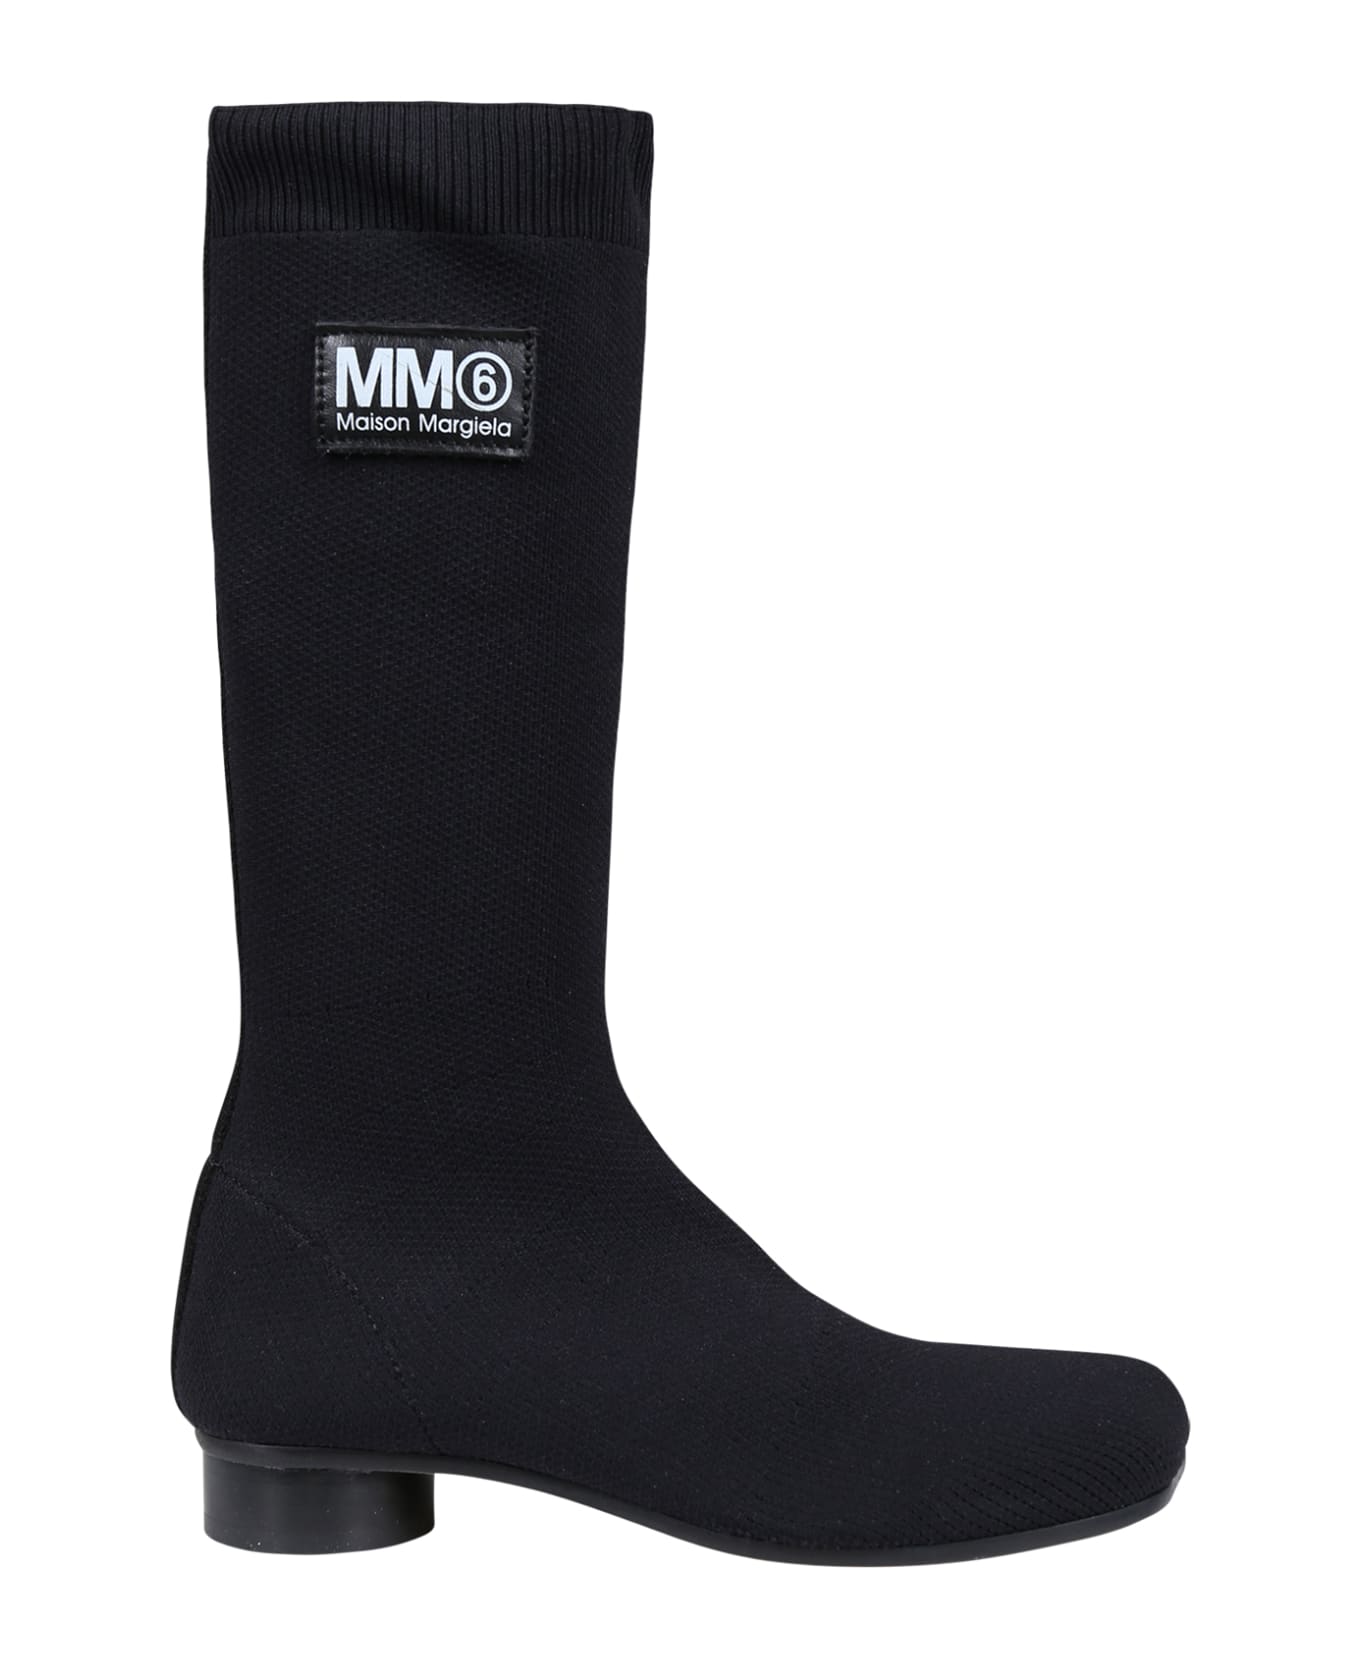 MM6 Maison Margiela Black Boots For Girl With Logo - Black